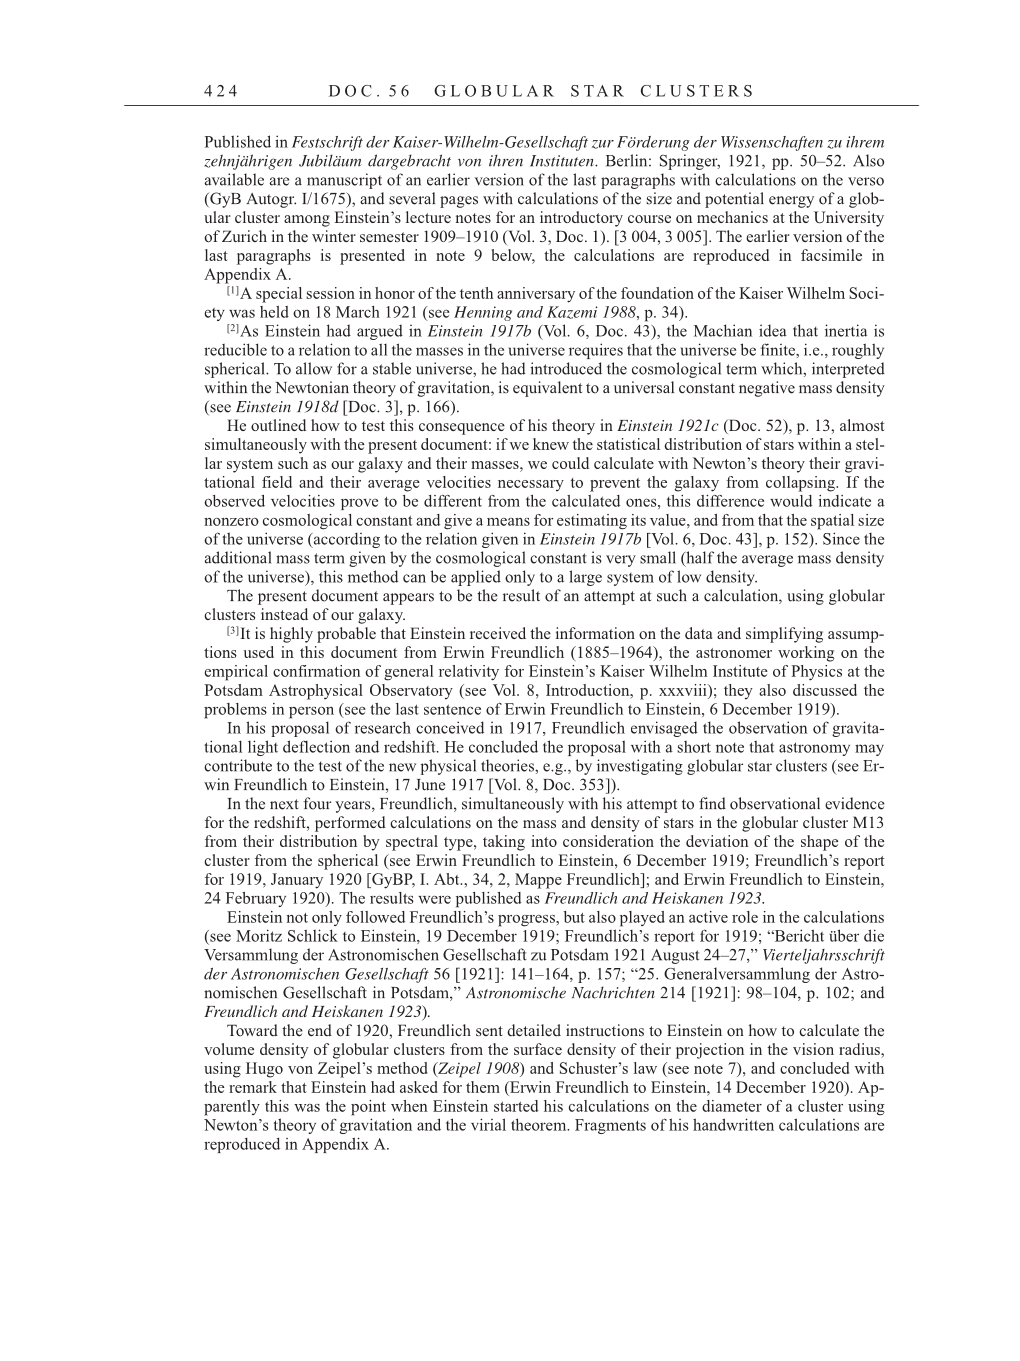 Volume 7: The Berlin Years: Writings, 1918-1921 page 424